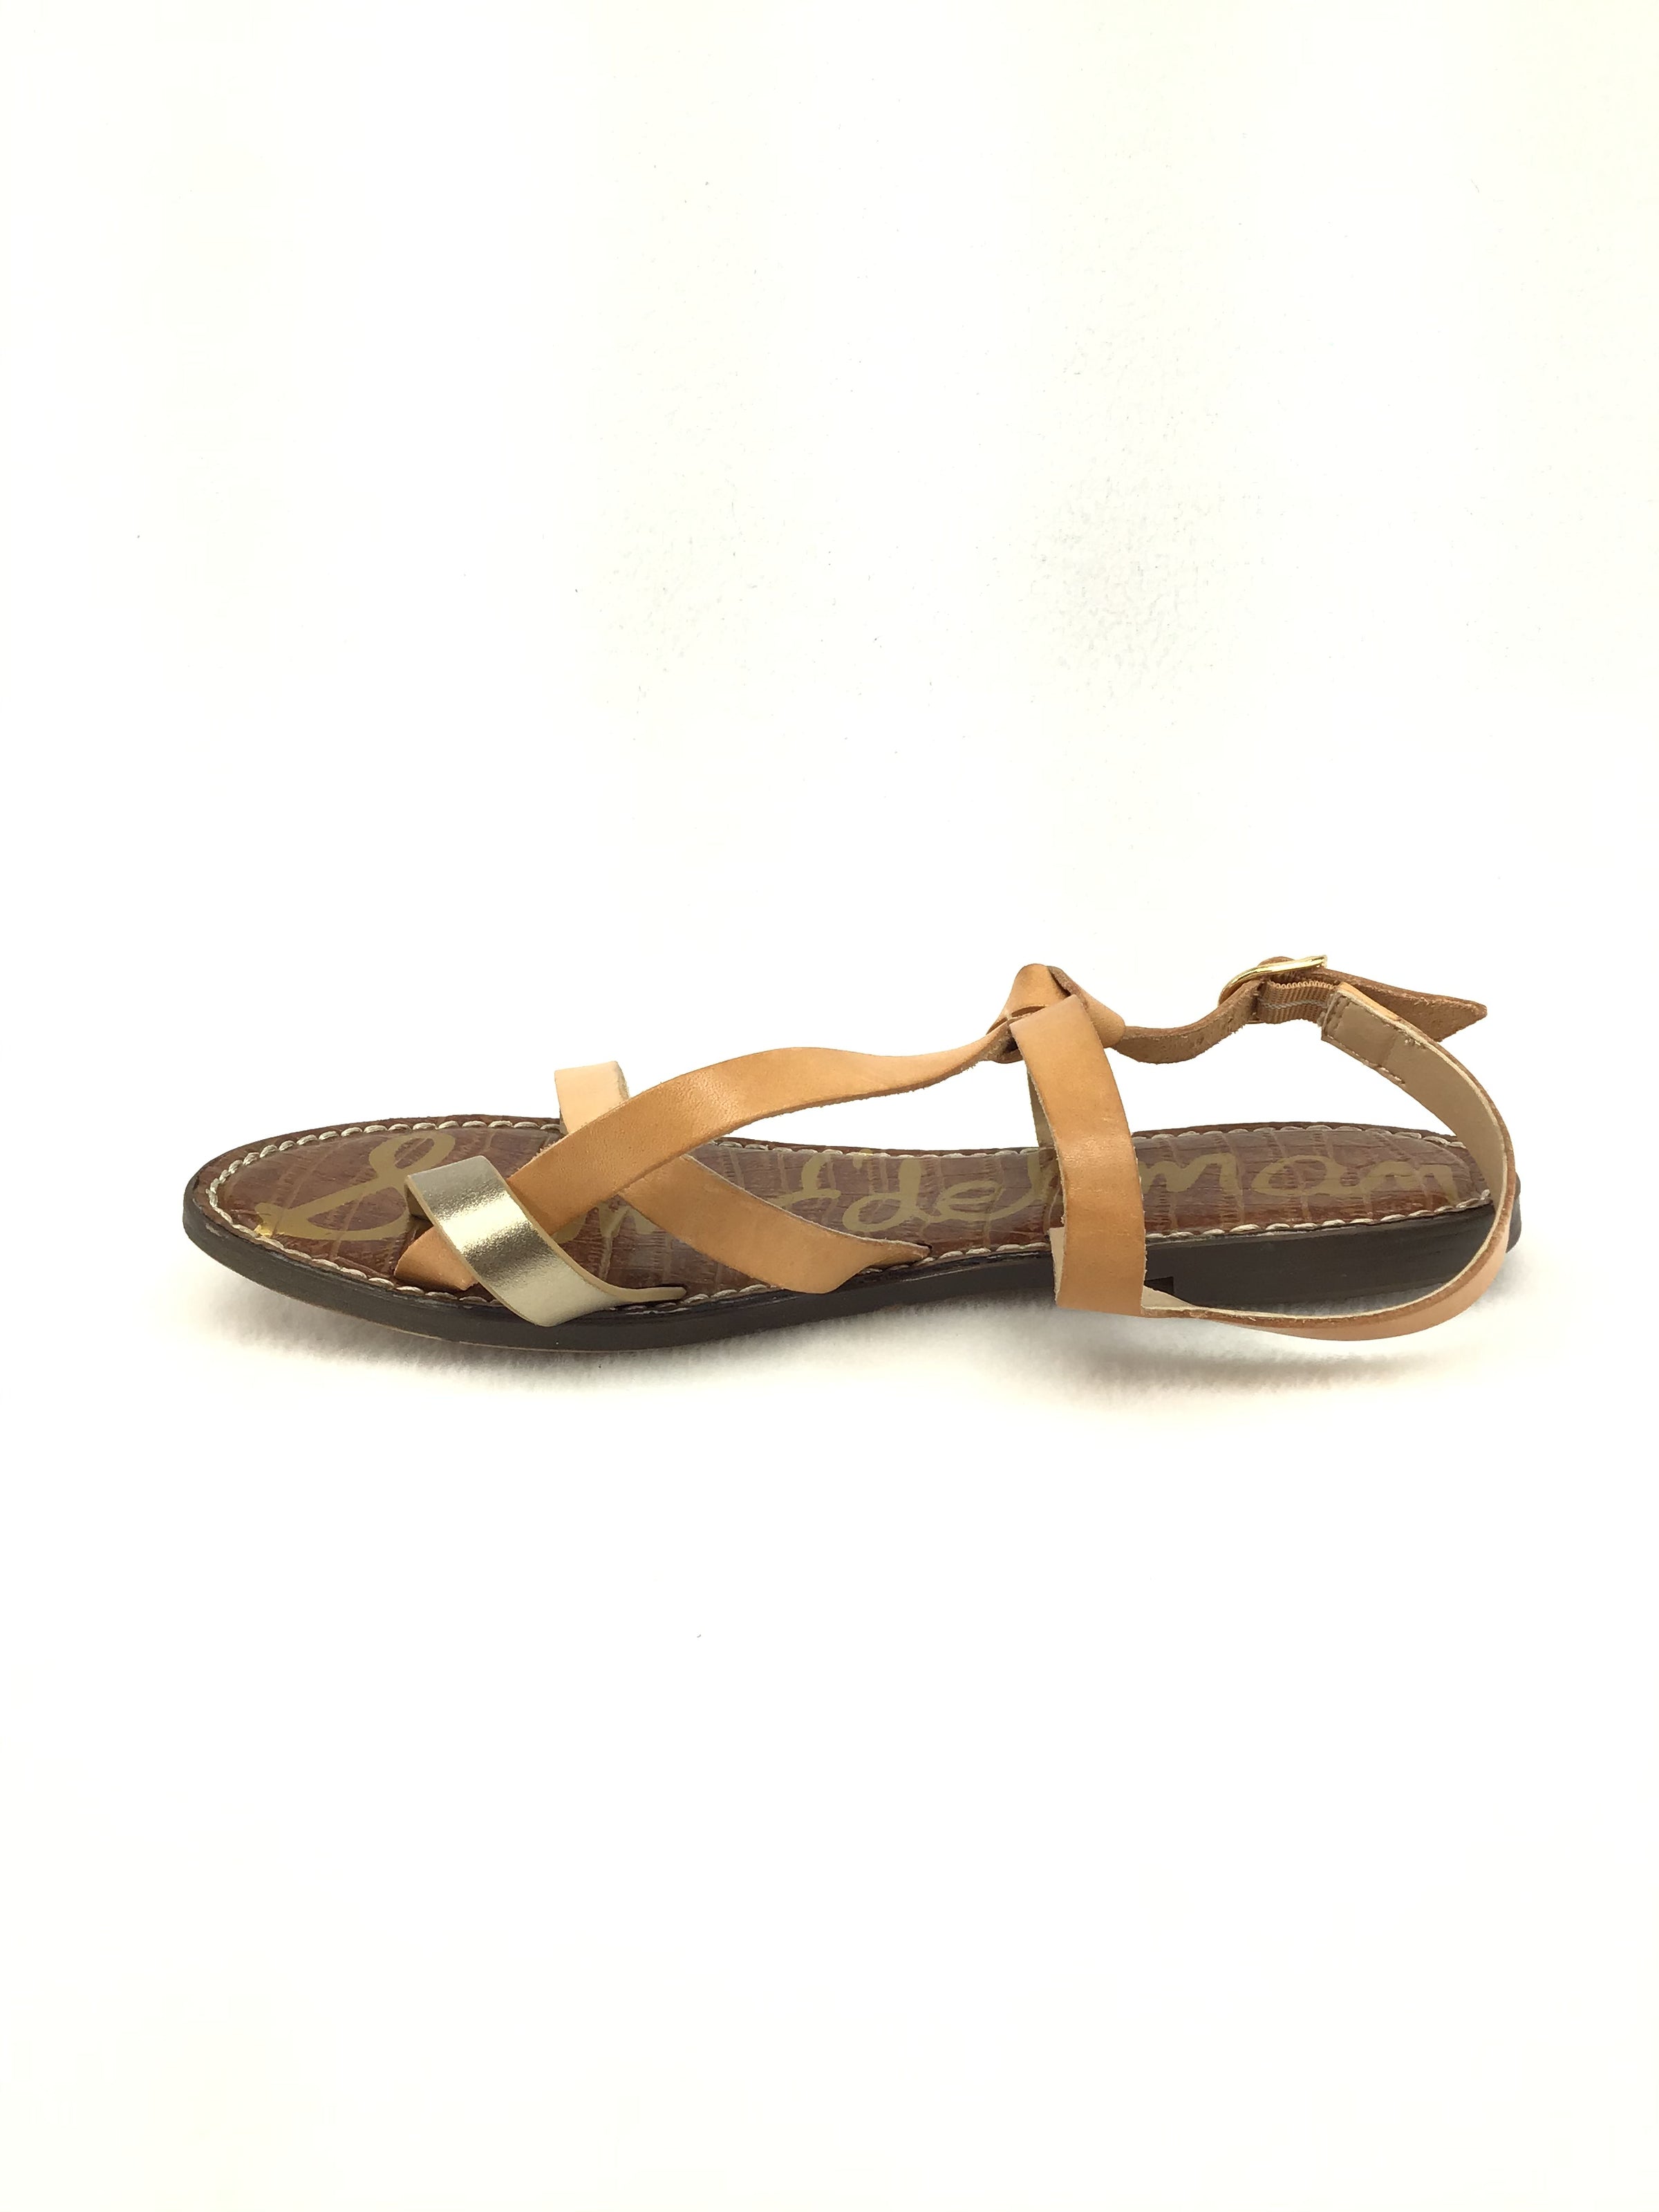 Sam Edelman Gladis Sandals Size 9M